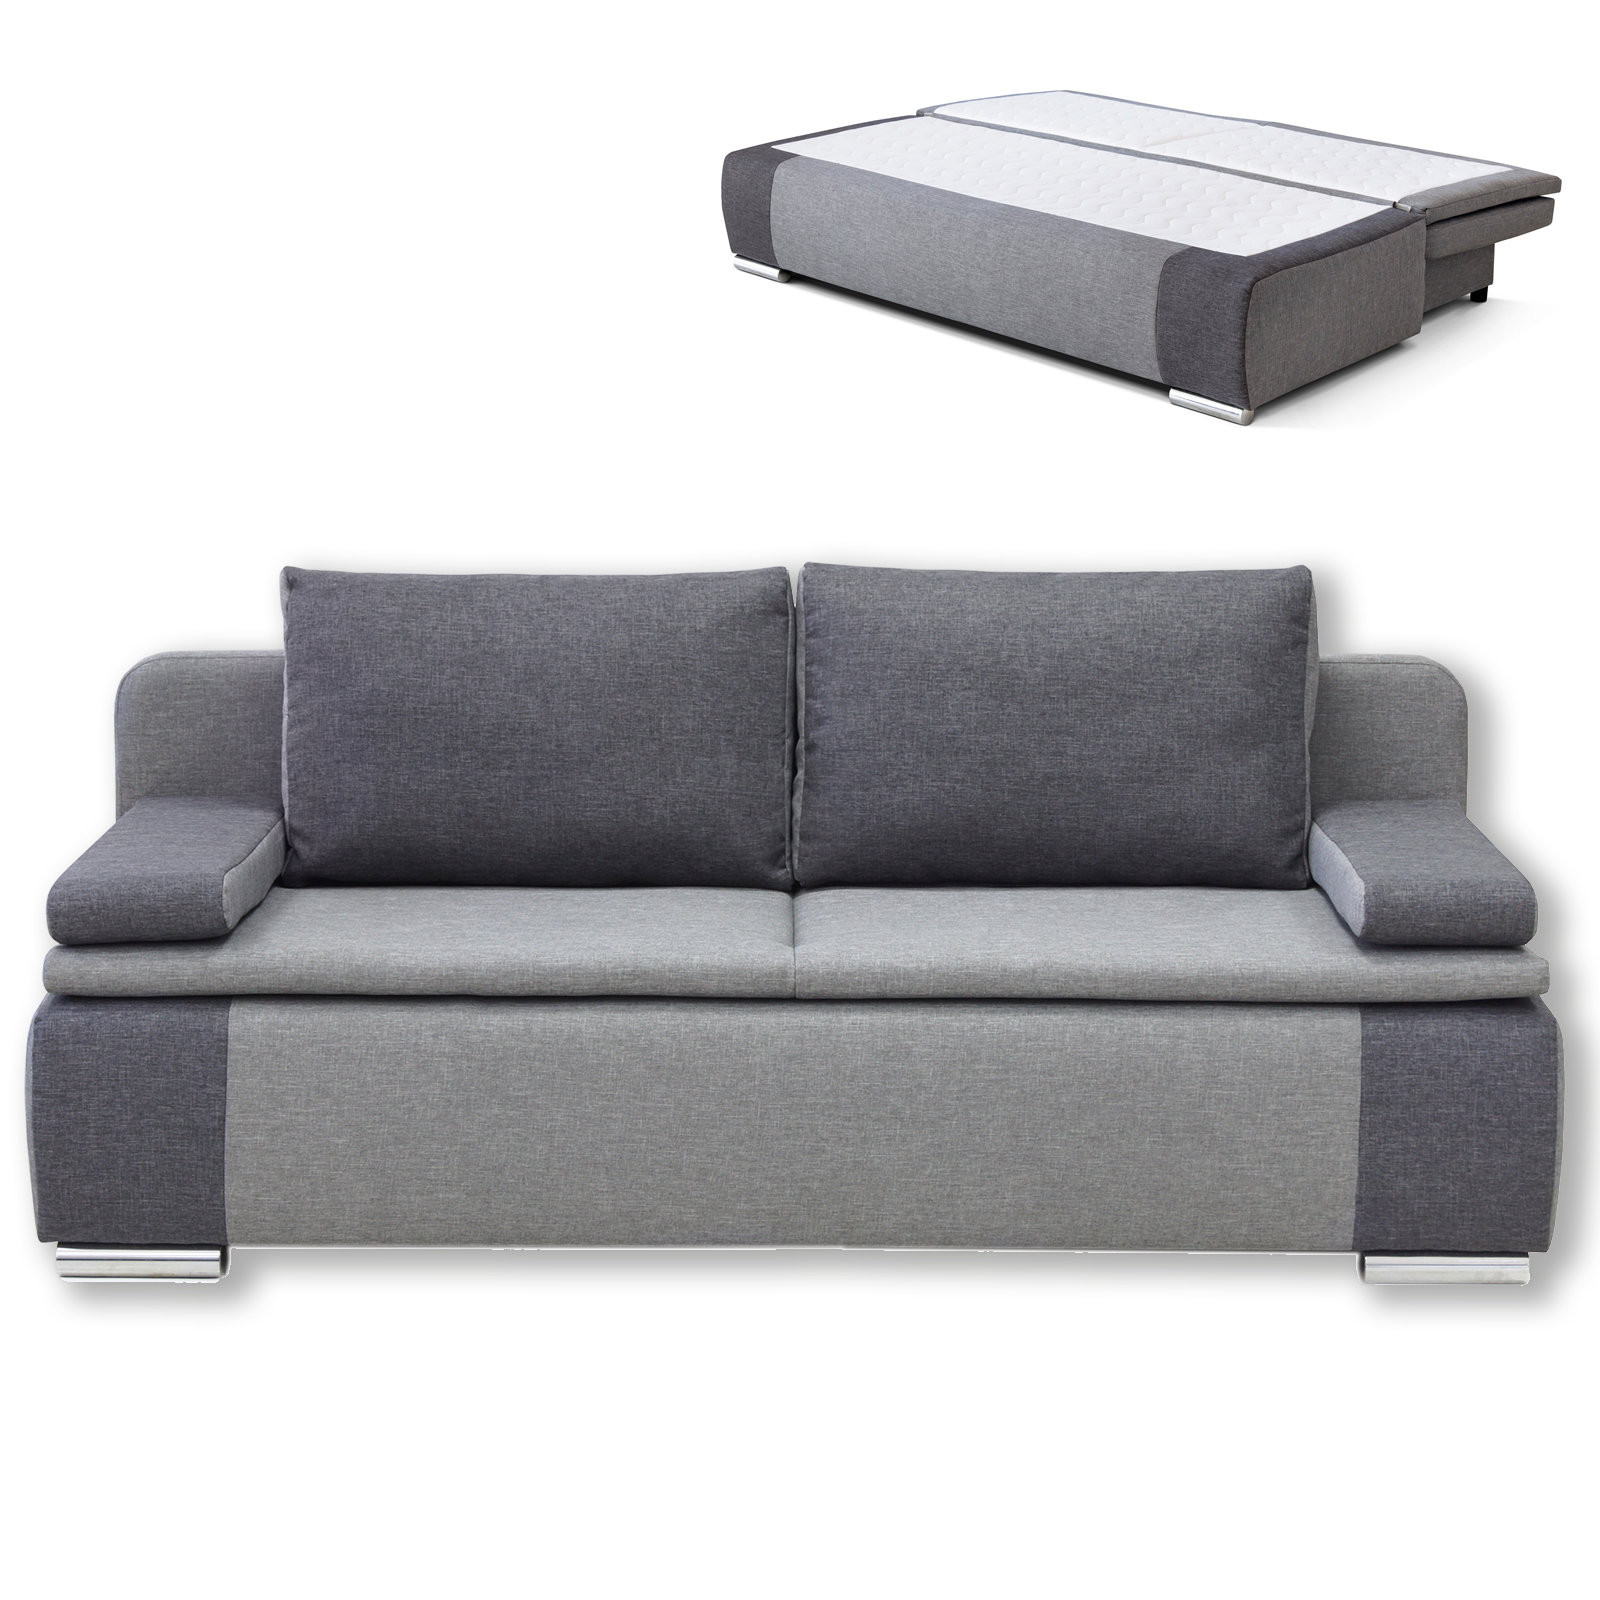 Dauerschläfer Sofa
 Schlafsofa grau mit Staukasten Dauerschläfer